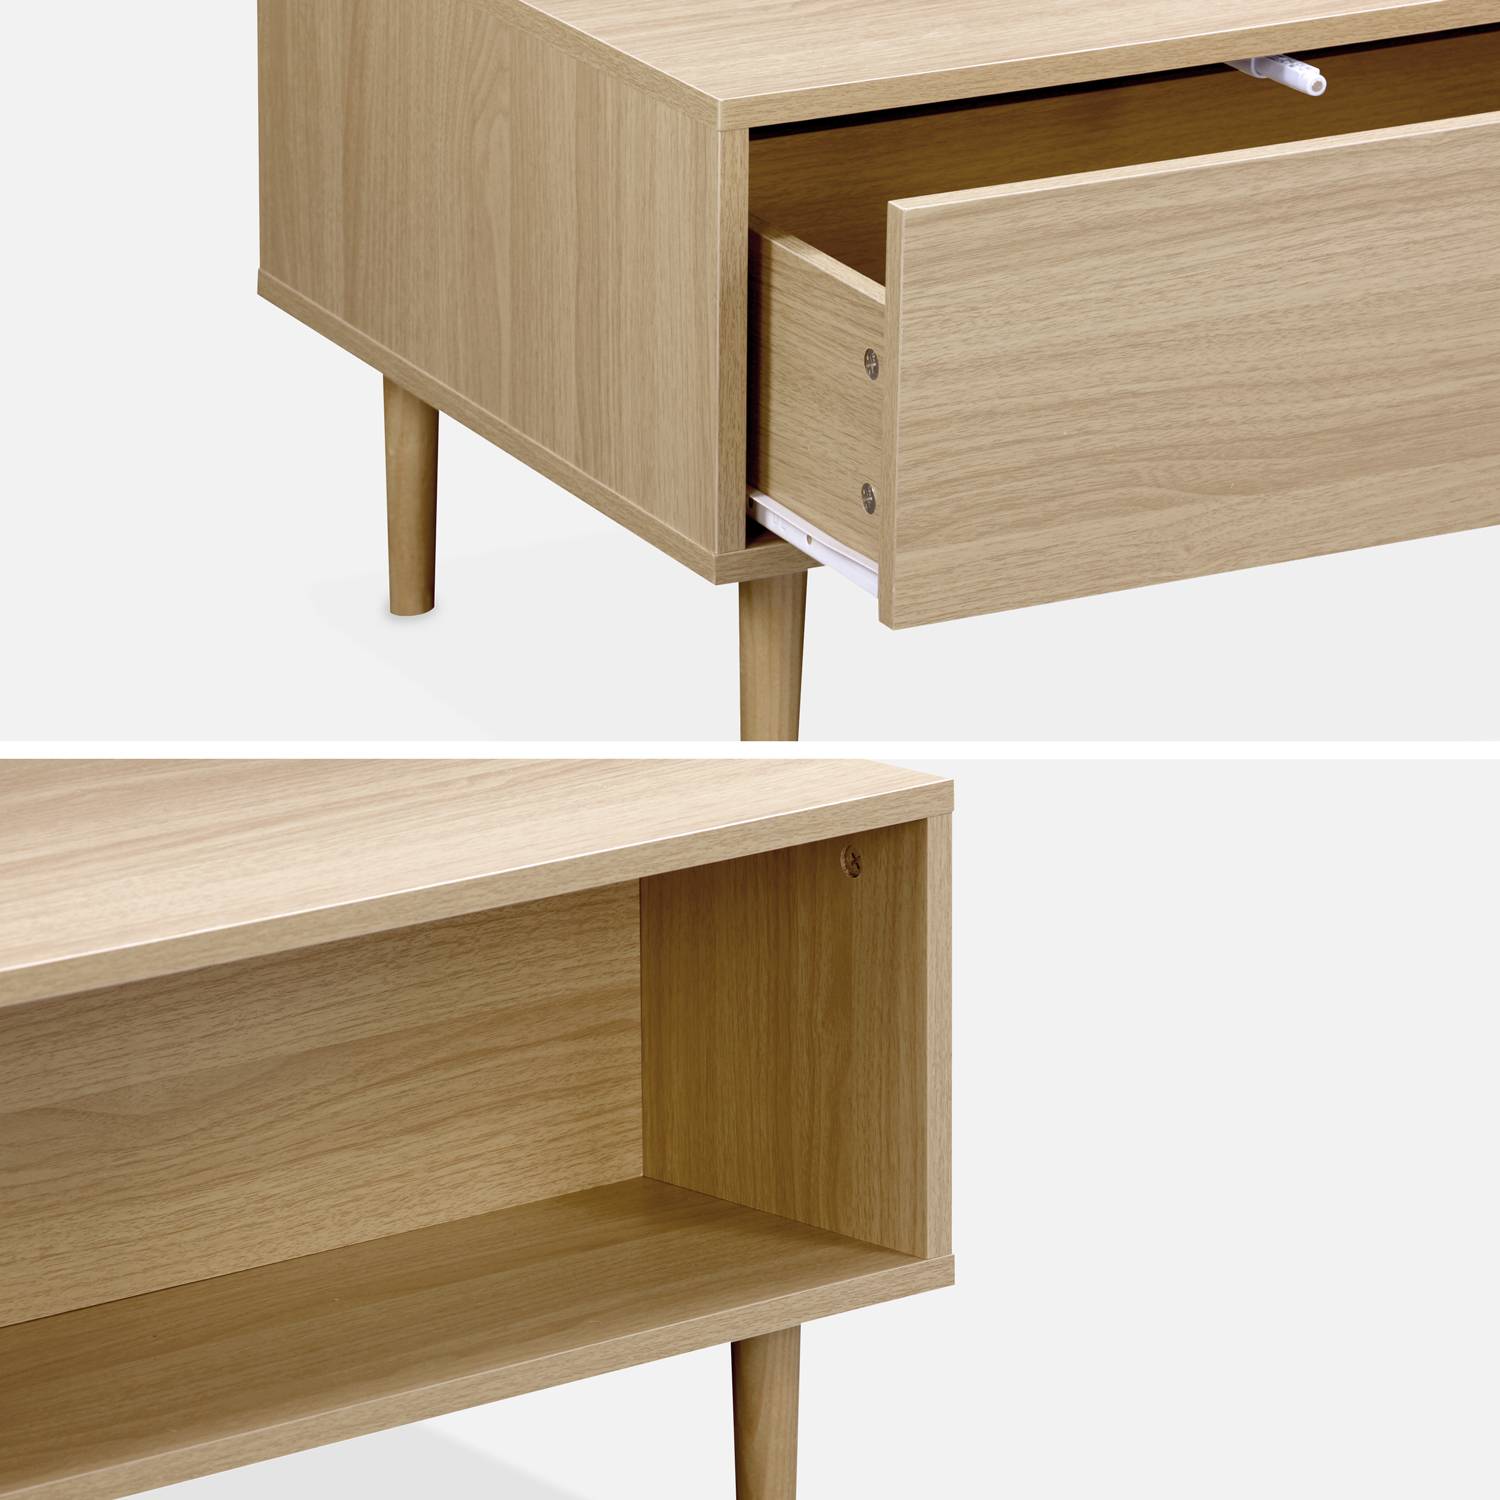 Wood-effect coffee table, 120x55x40cm, Mika, Natural wood colour,sweeek,Photo6